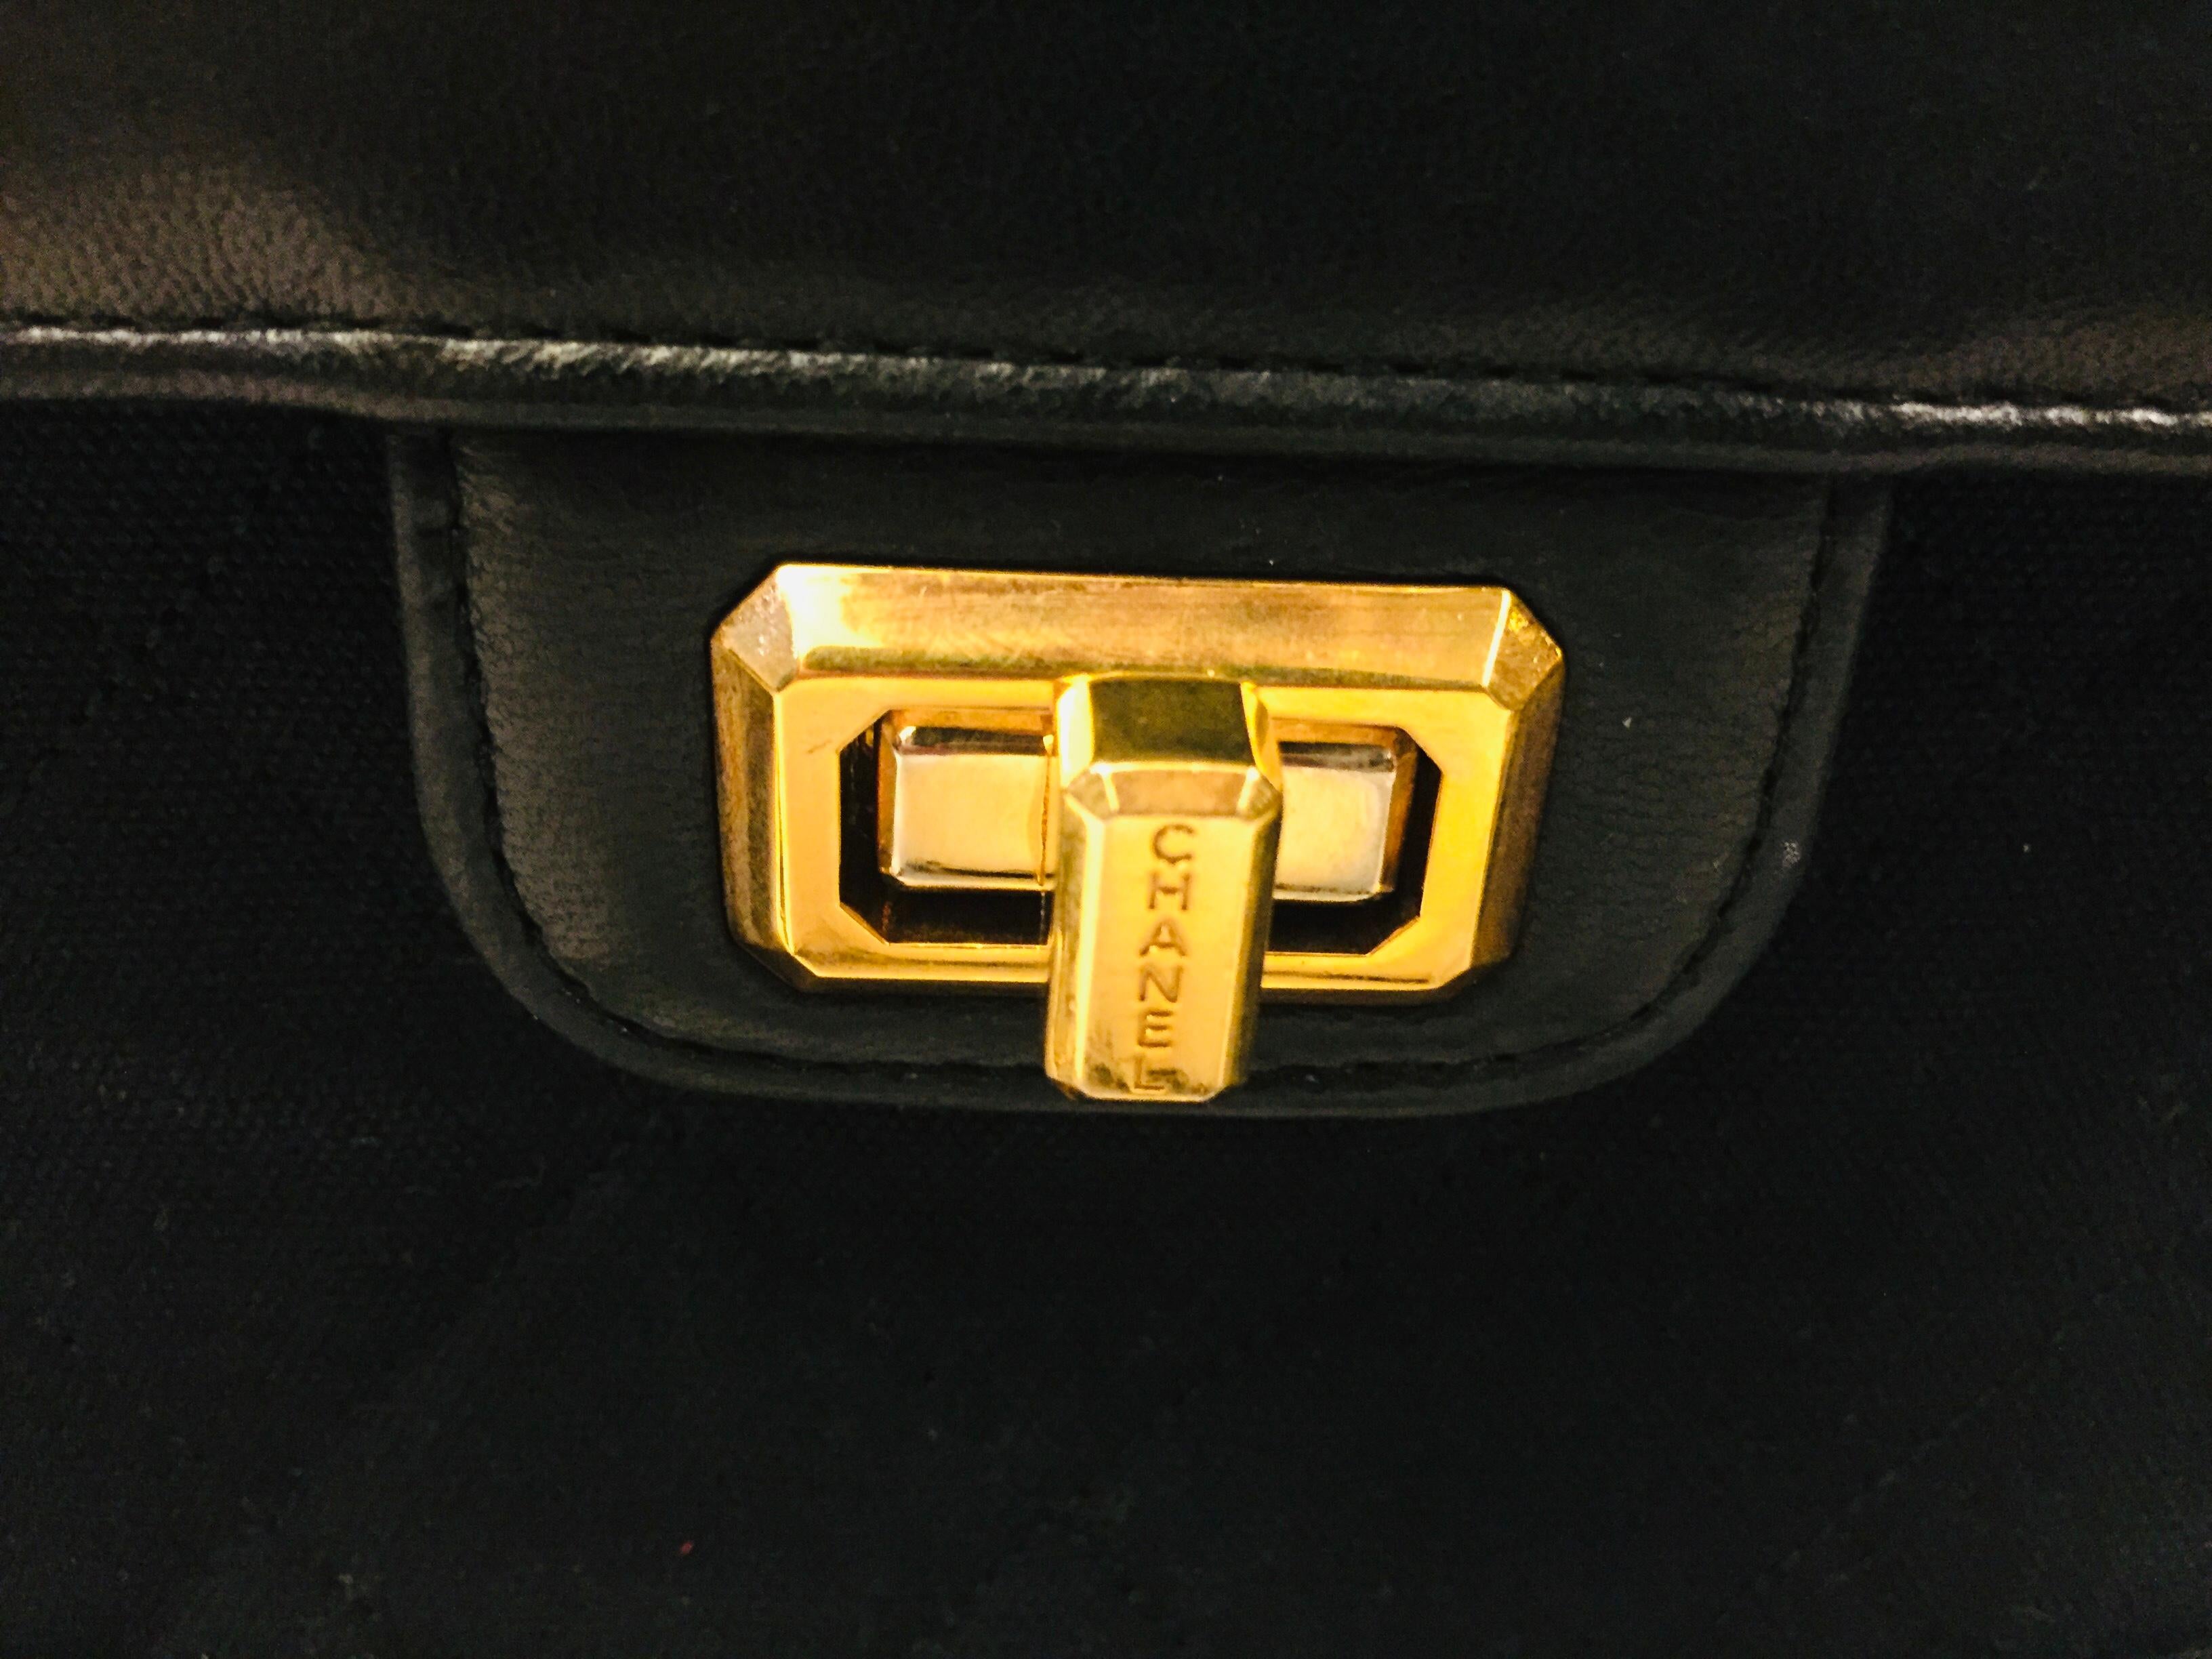 - Vintage 90s Chanel black canvas and leather shoulder bag.

- “Chanel’ turn-lock closure. 

- Measurements: 25cm x 18cm x 8cm. Drop: 45cm for single strap and 24 cm for double straps. 
